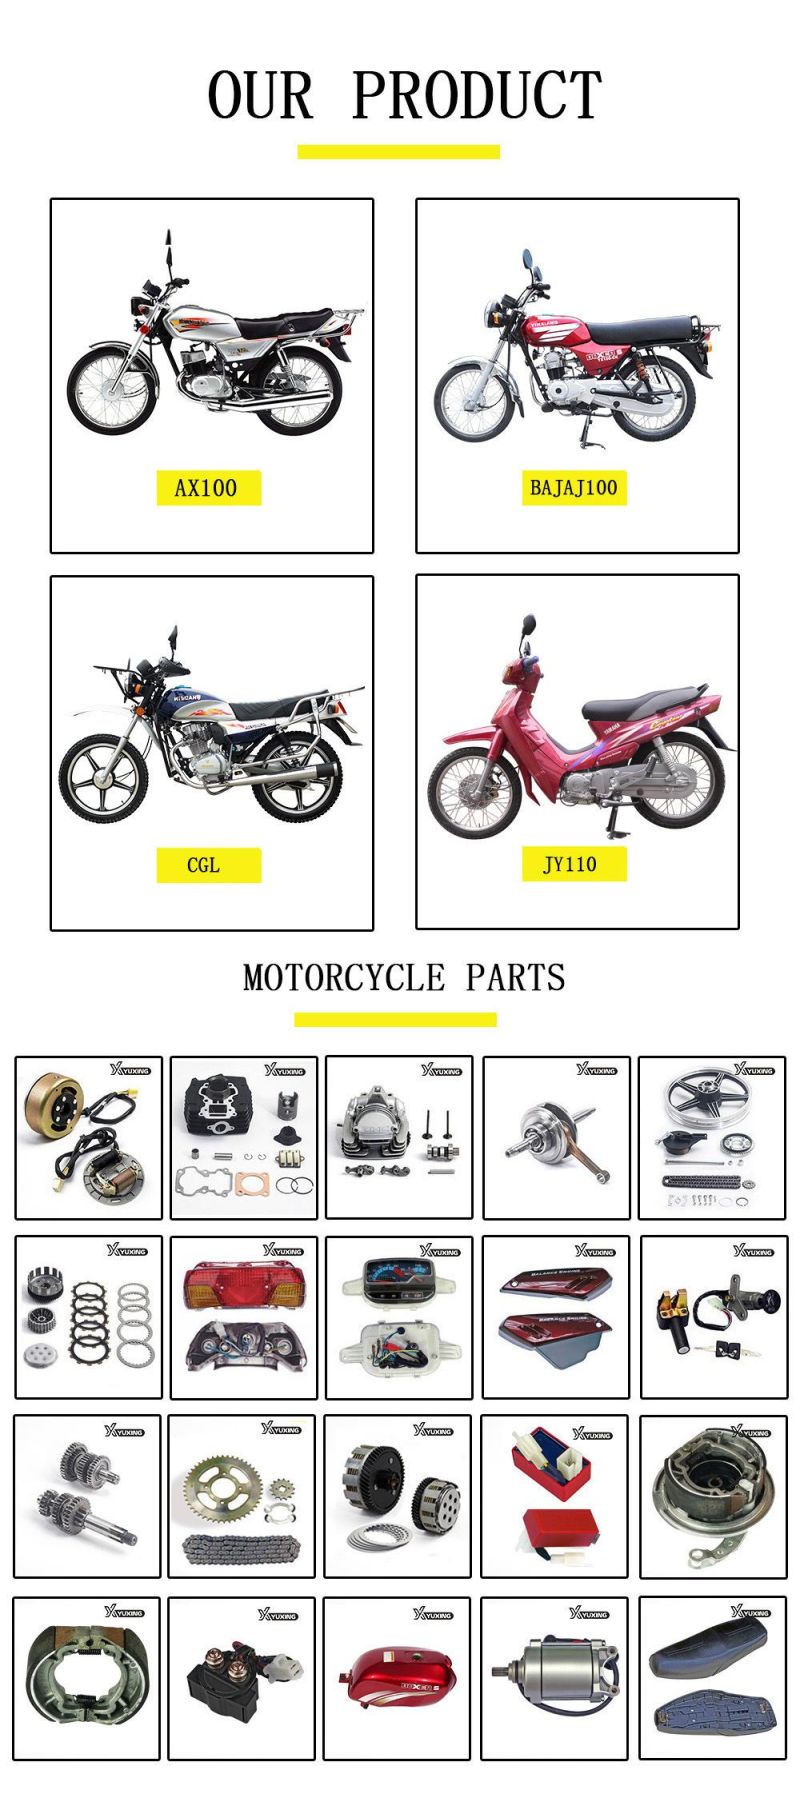 Yuxing Motorcycle Spare Parts Motorcycle Aluminum Alloy Rear Wheel Rim Wheel Assy